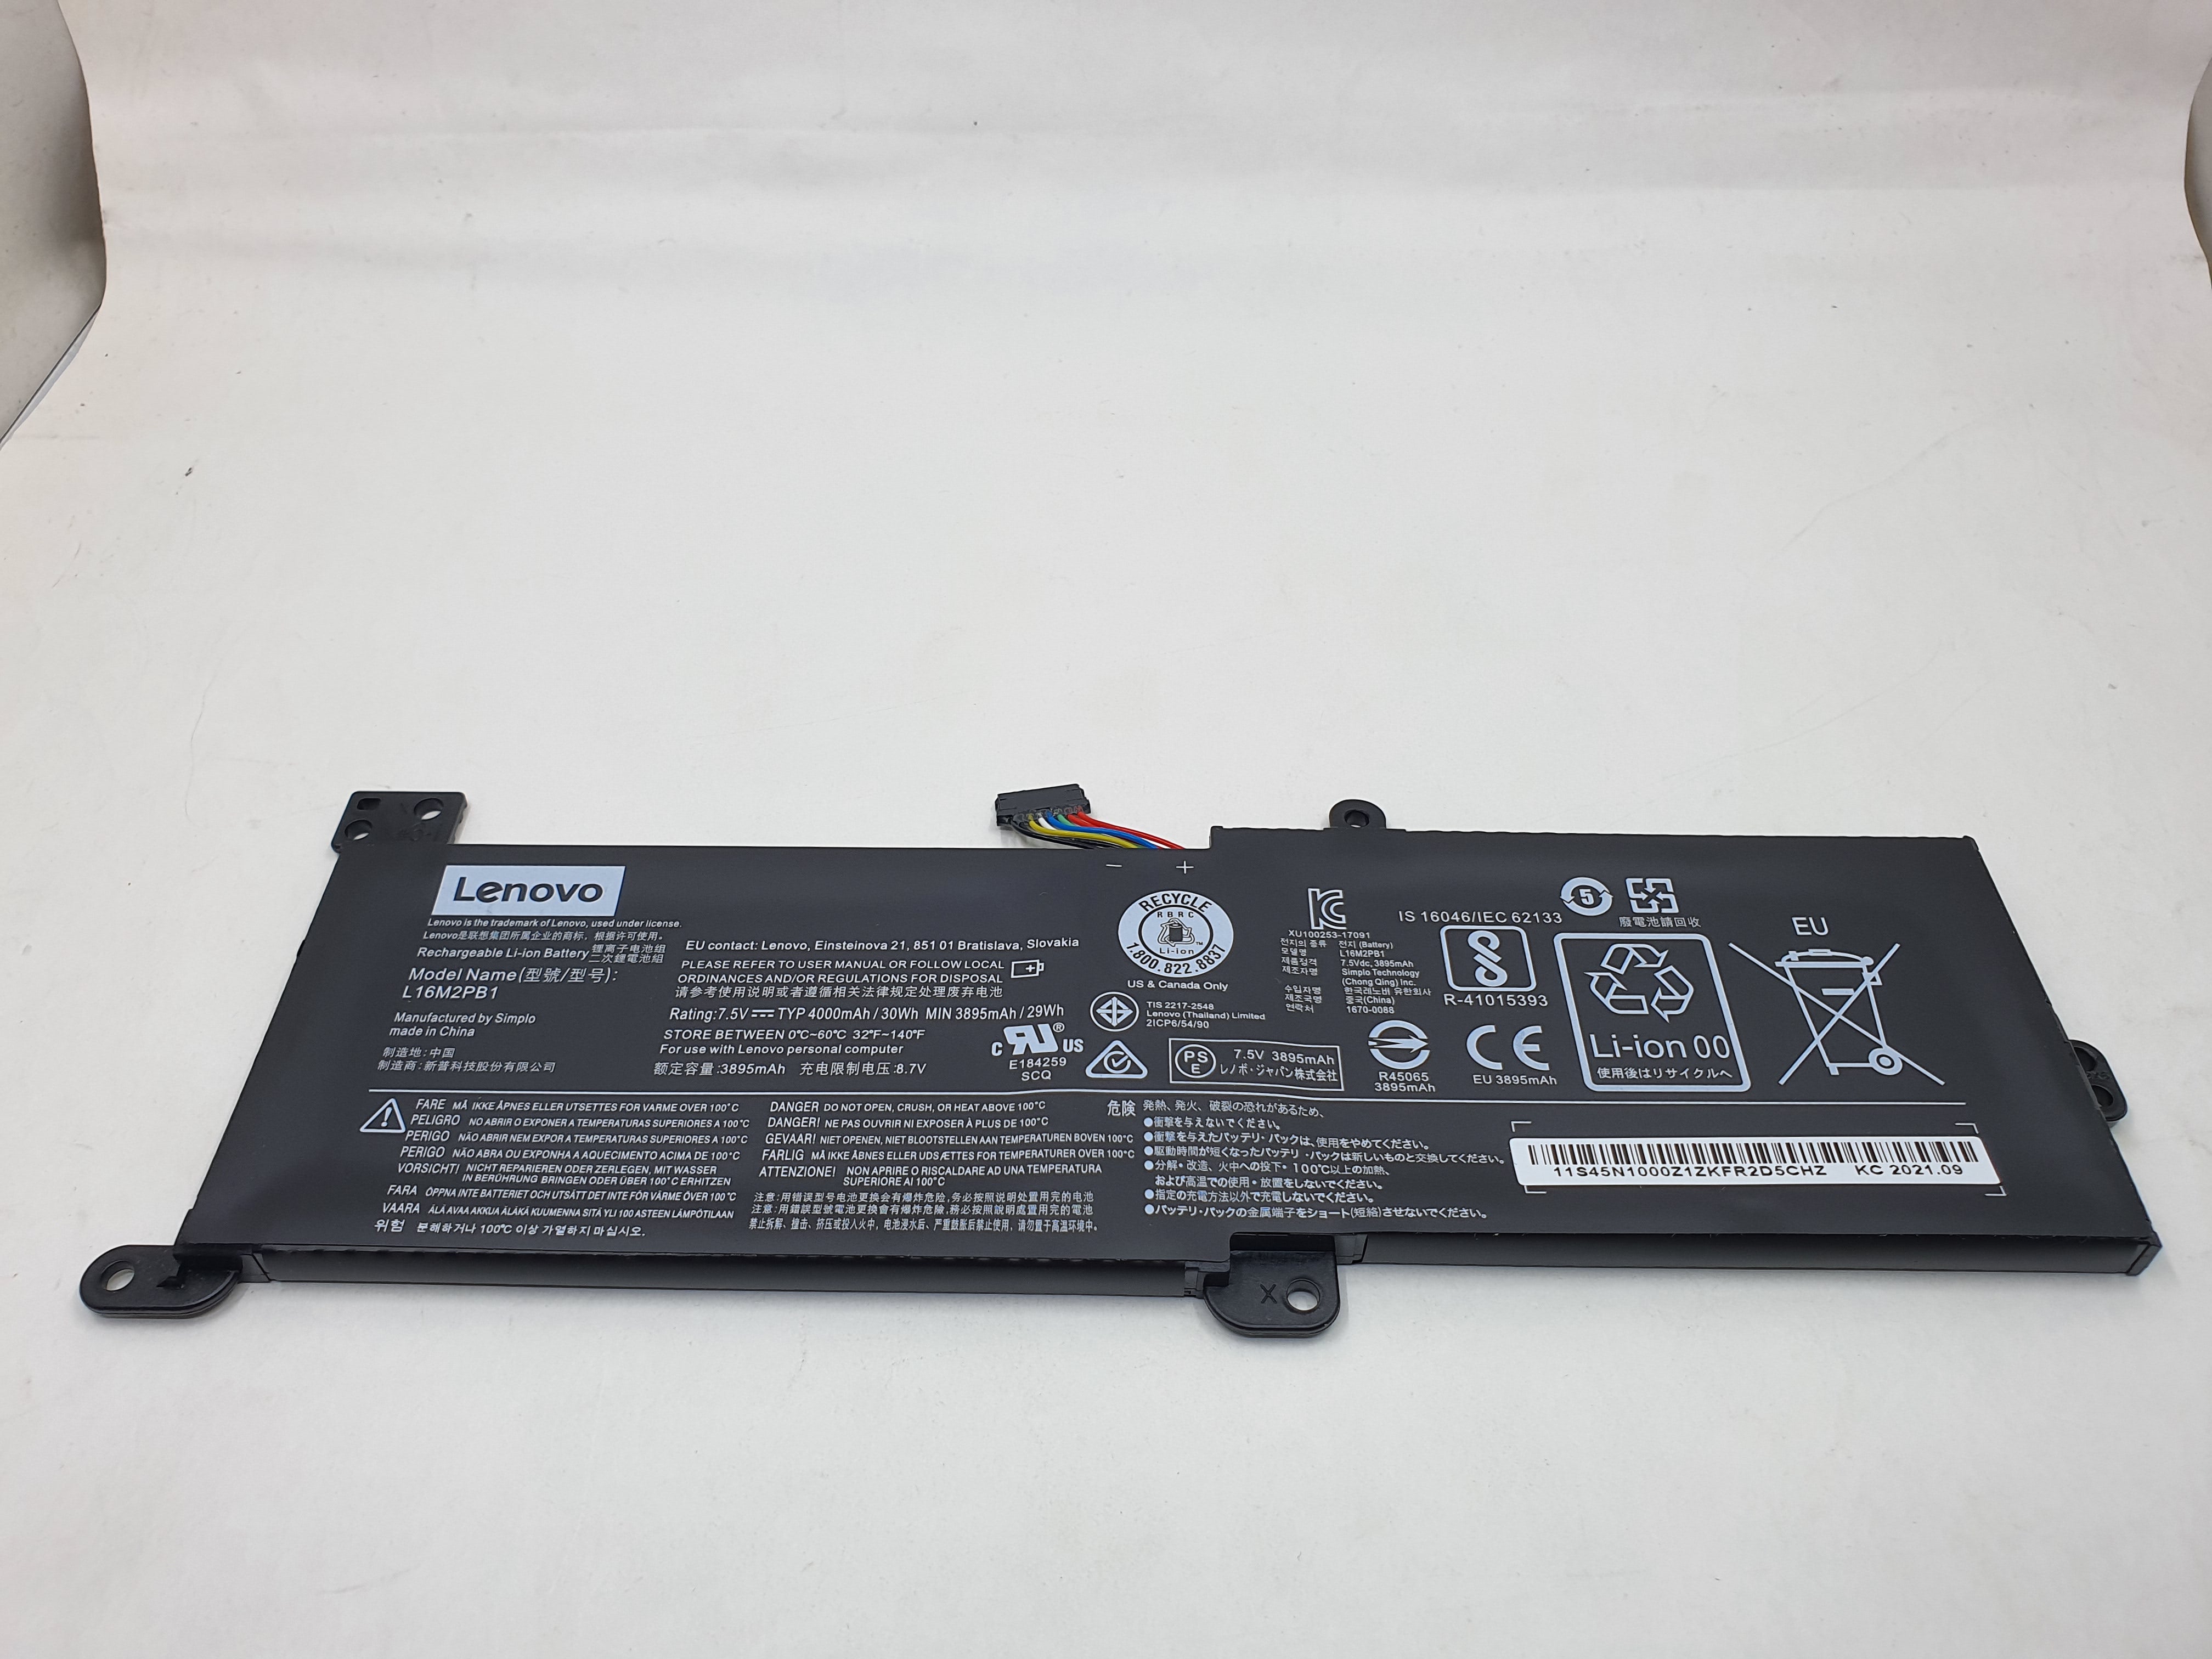 Lenovo Battery V320-17IKB A1 for Replacement - Lenovo IdeaPad V320-17IKB